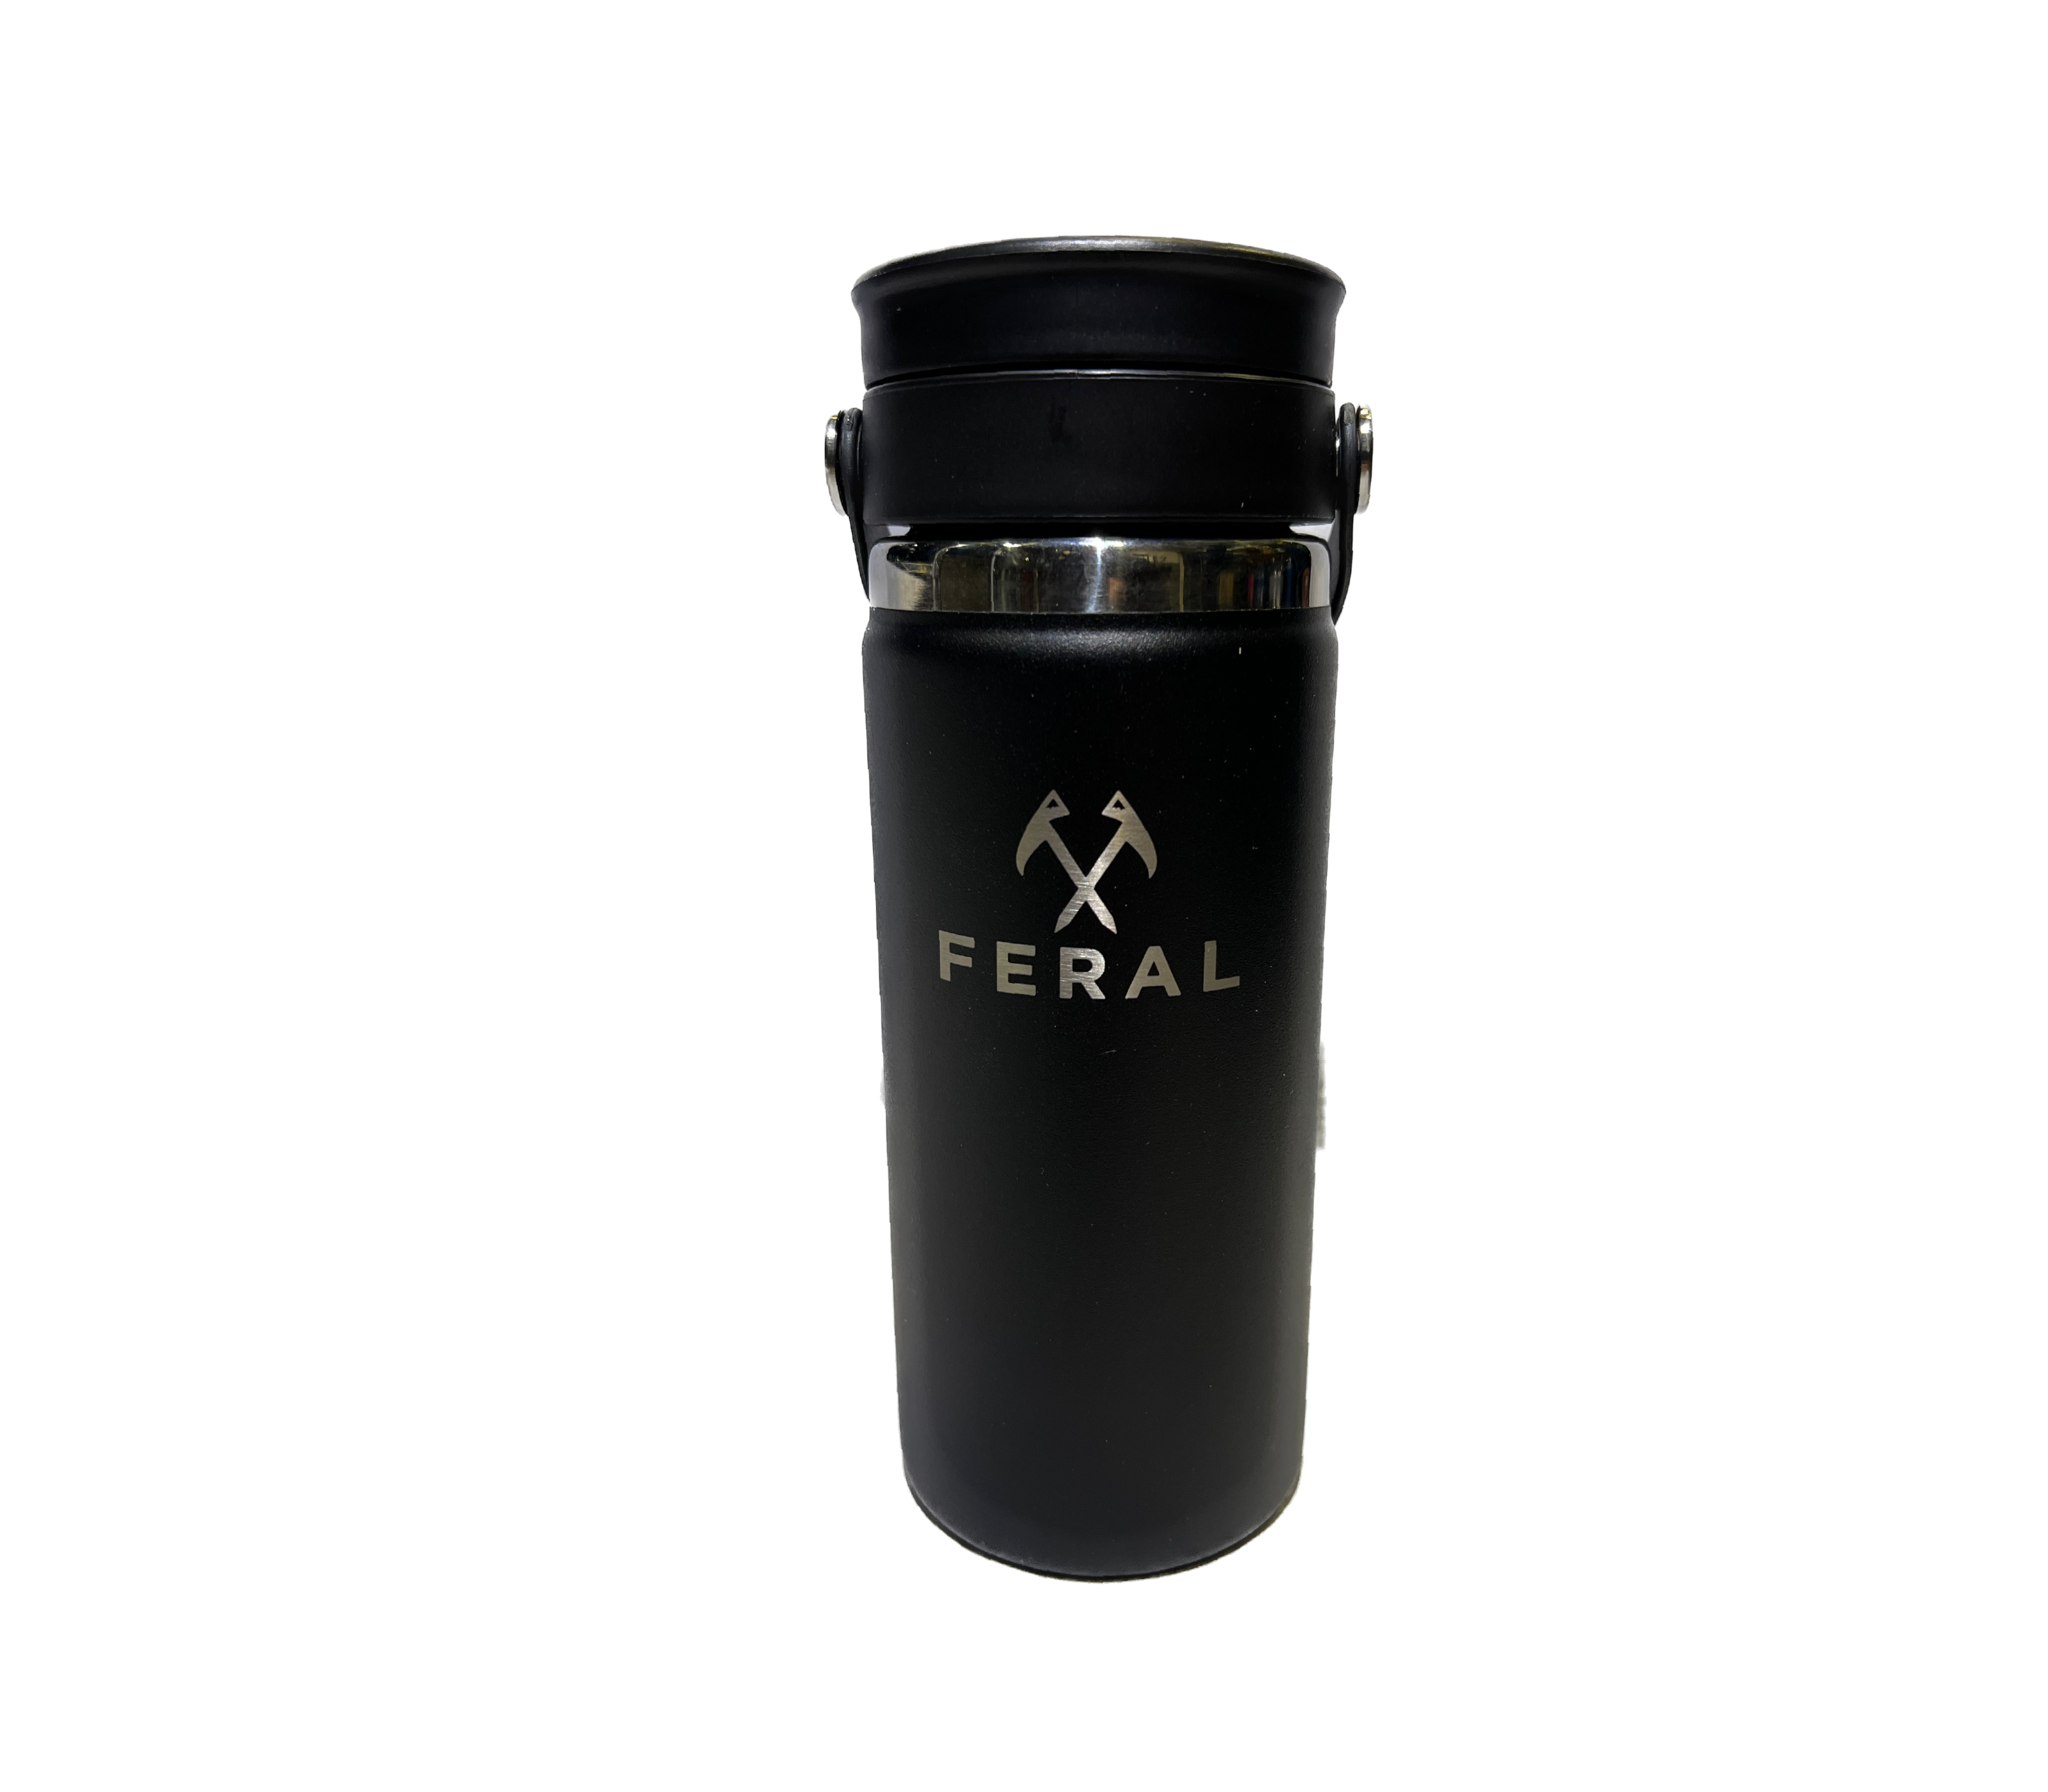 Hydro Flask 16 oz All Around Tumbler - Insulated Mug - 473 ml - Black